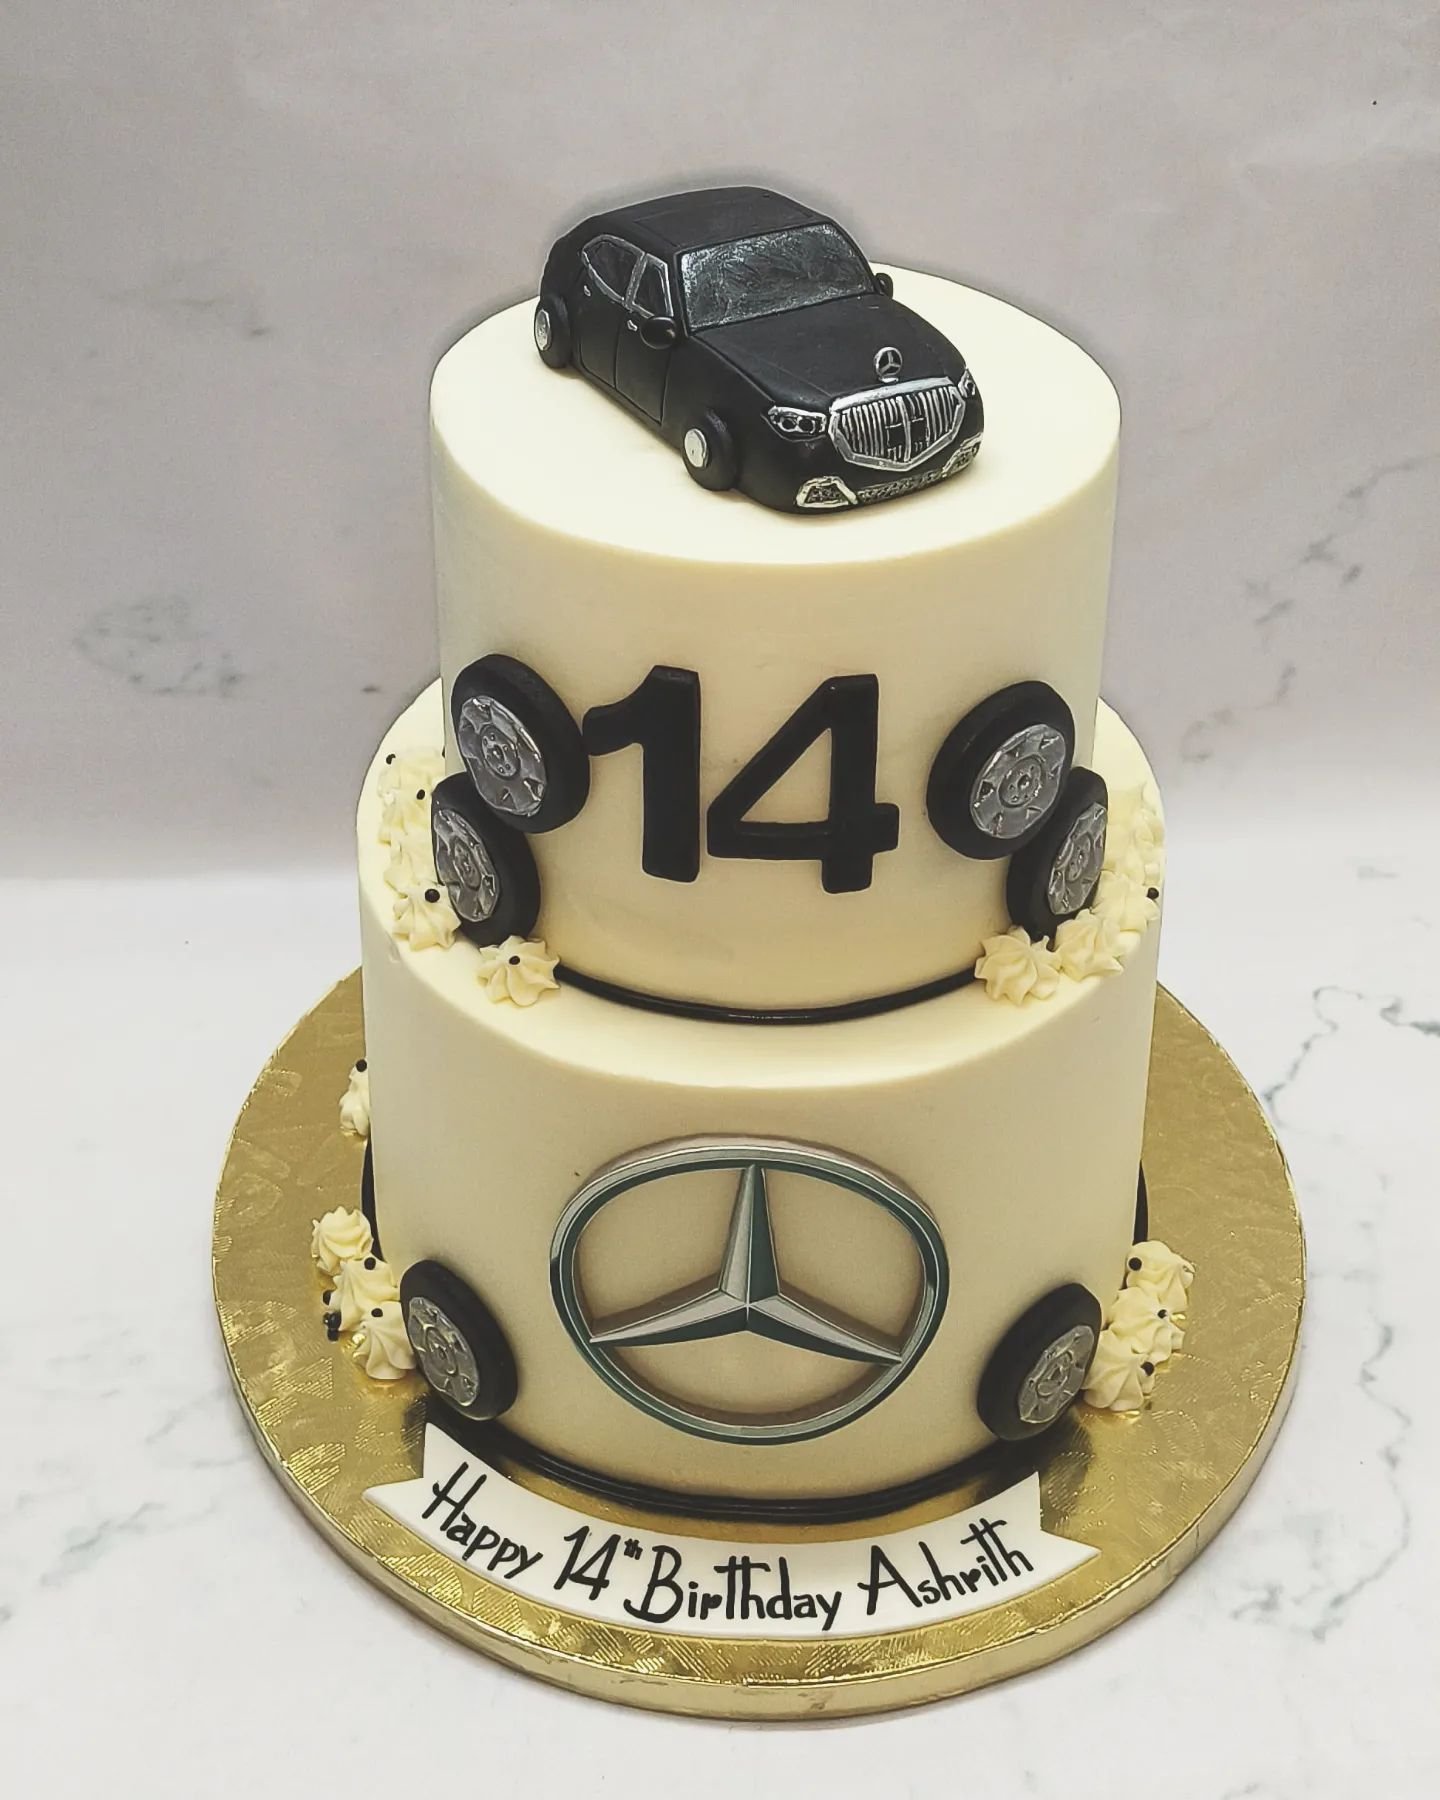 Mercedes themed two tier cake

[ customized theme cake, car theme cake, fourteenth birthday]